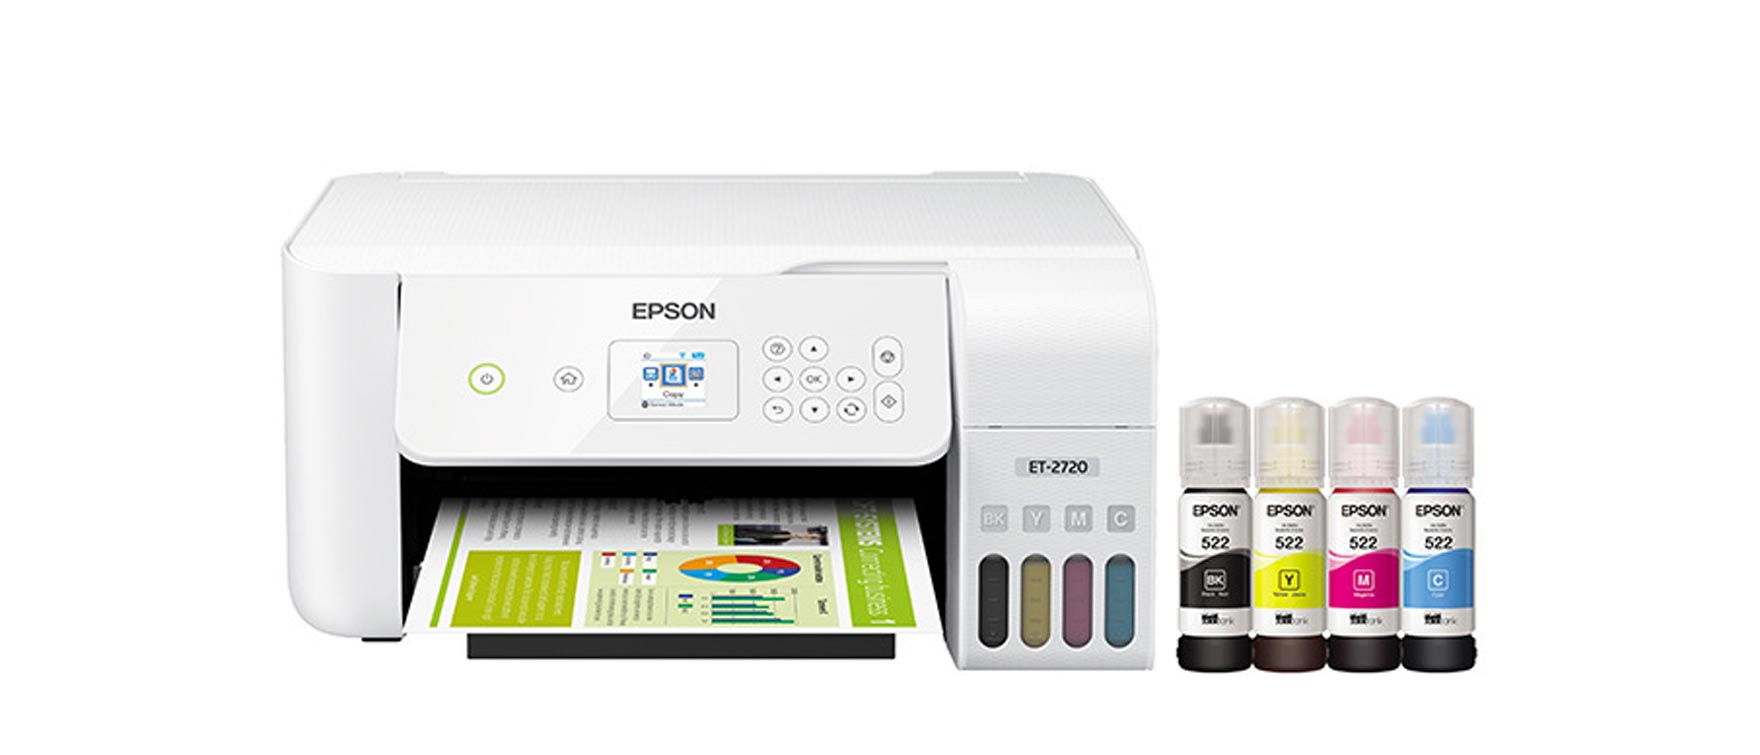 2. Epson EcoTank ET-2720 Wireless Color All-in-One Supertank Printer